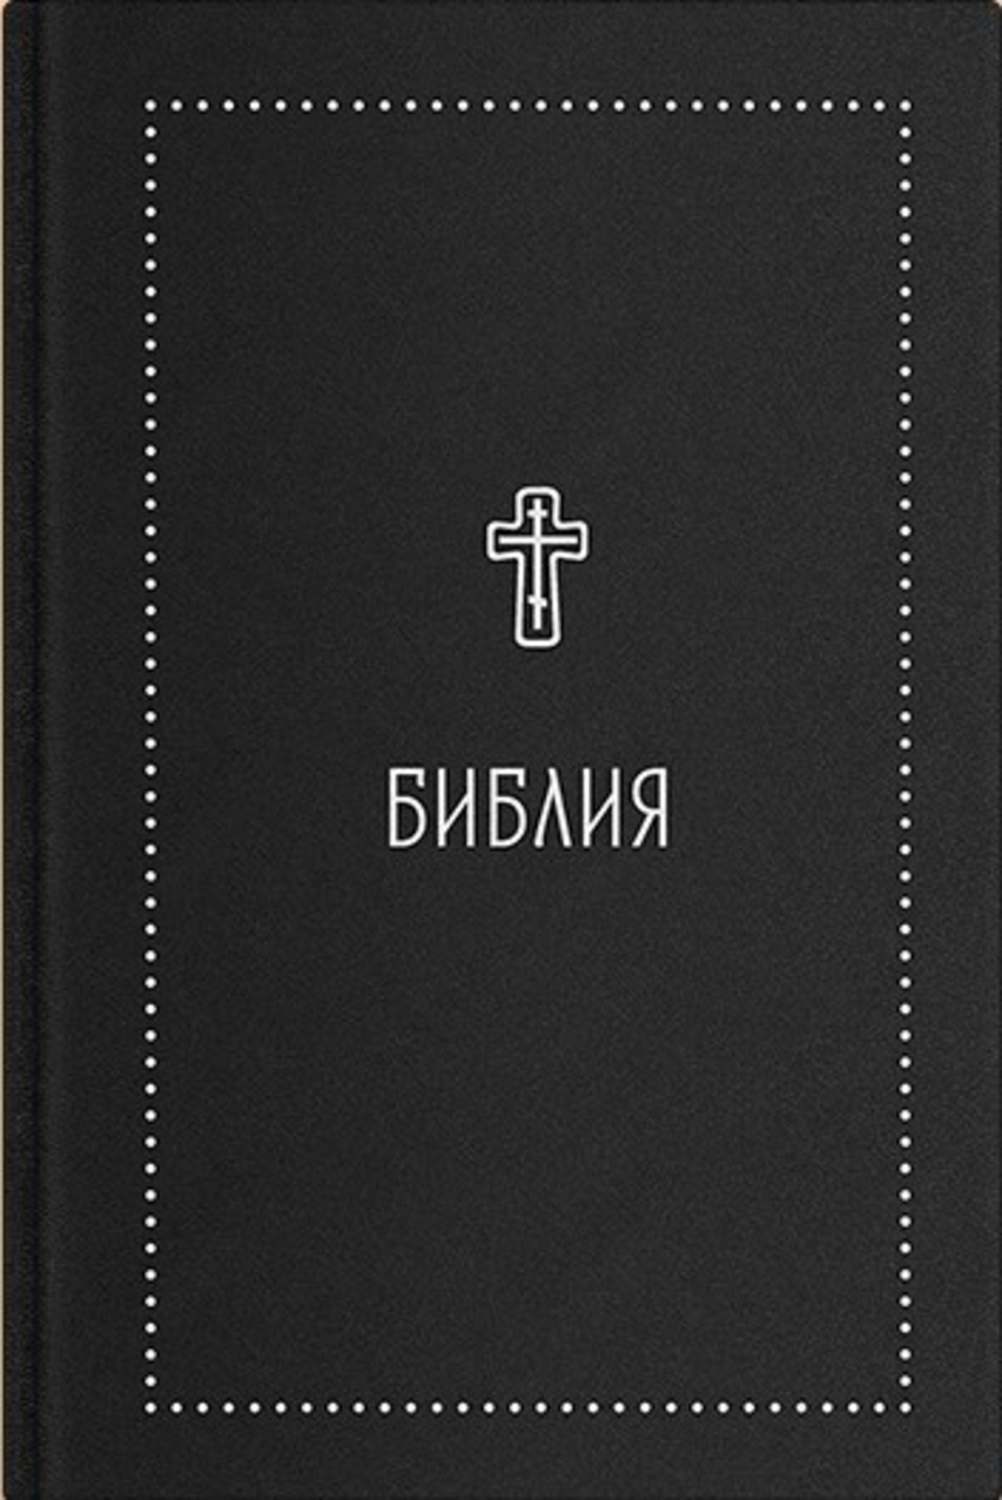 Книга библа. Библия книга. Библия обложка. Библия черная обложка. Библия обложка книги.